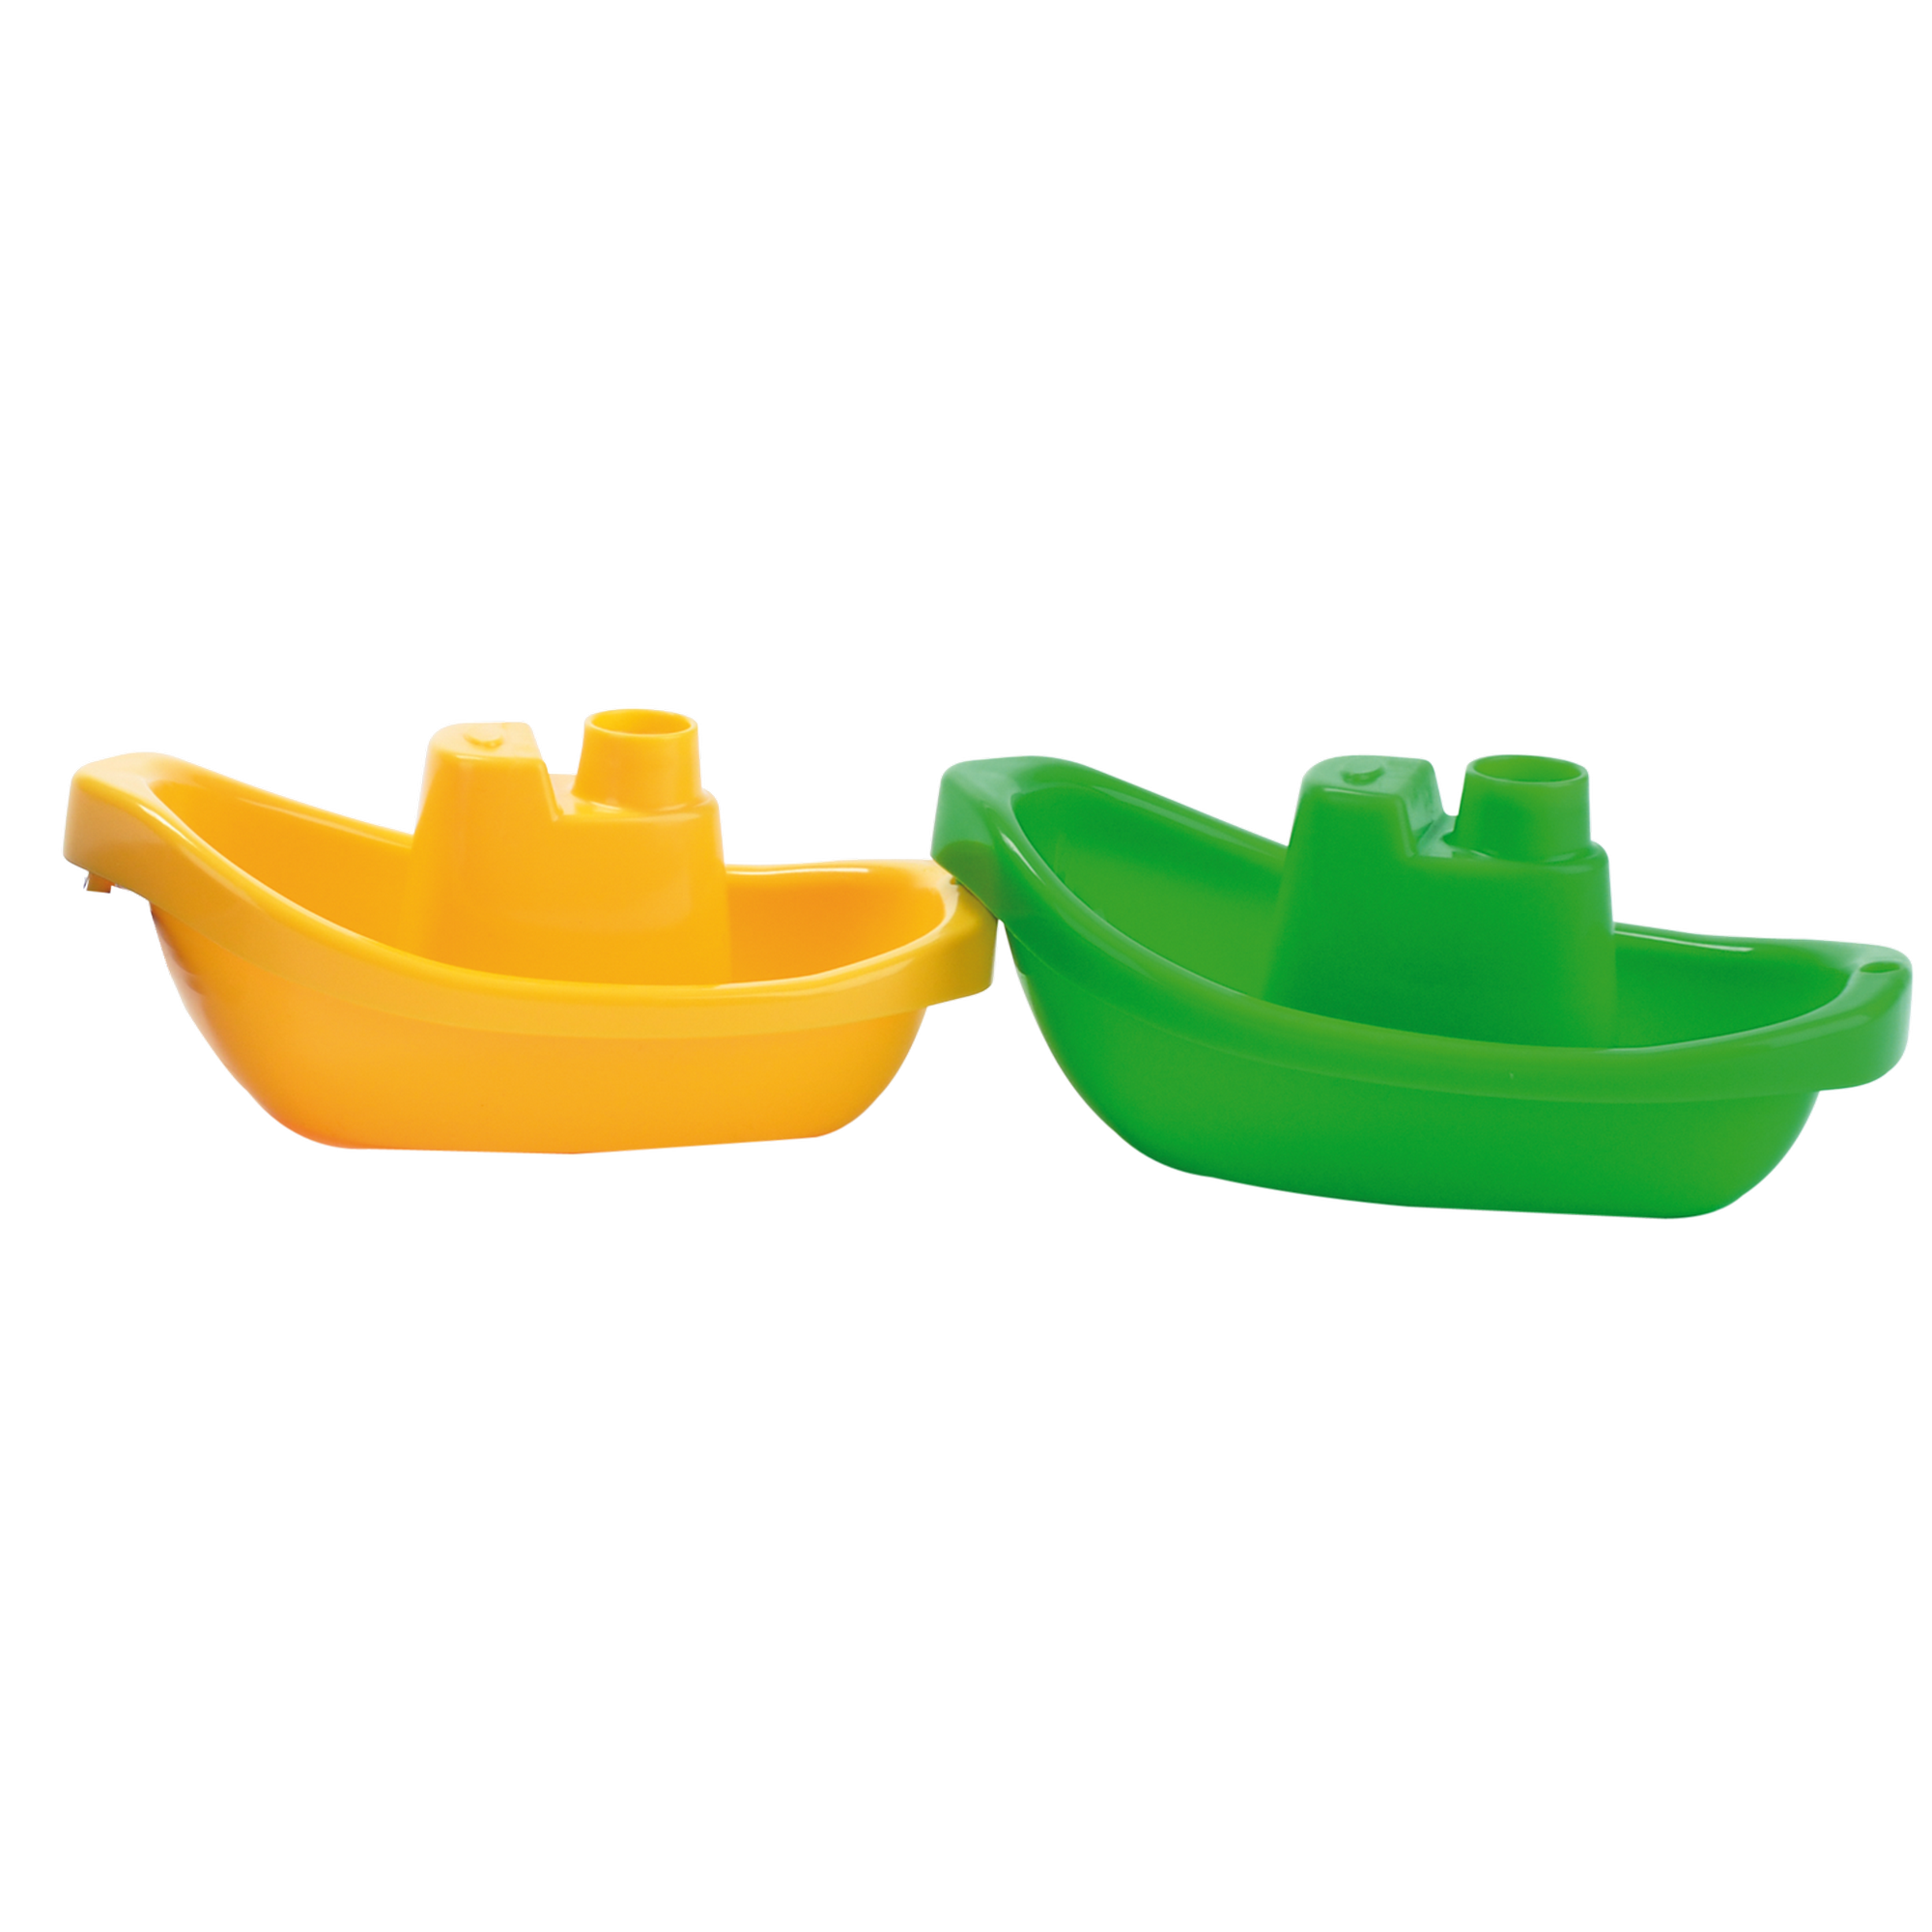 Spielzeugboot 'Wasserspiel' 14,5 cm, 4 Farben sortiert + product picture